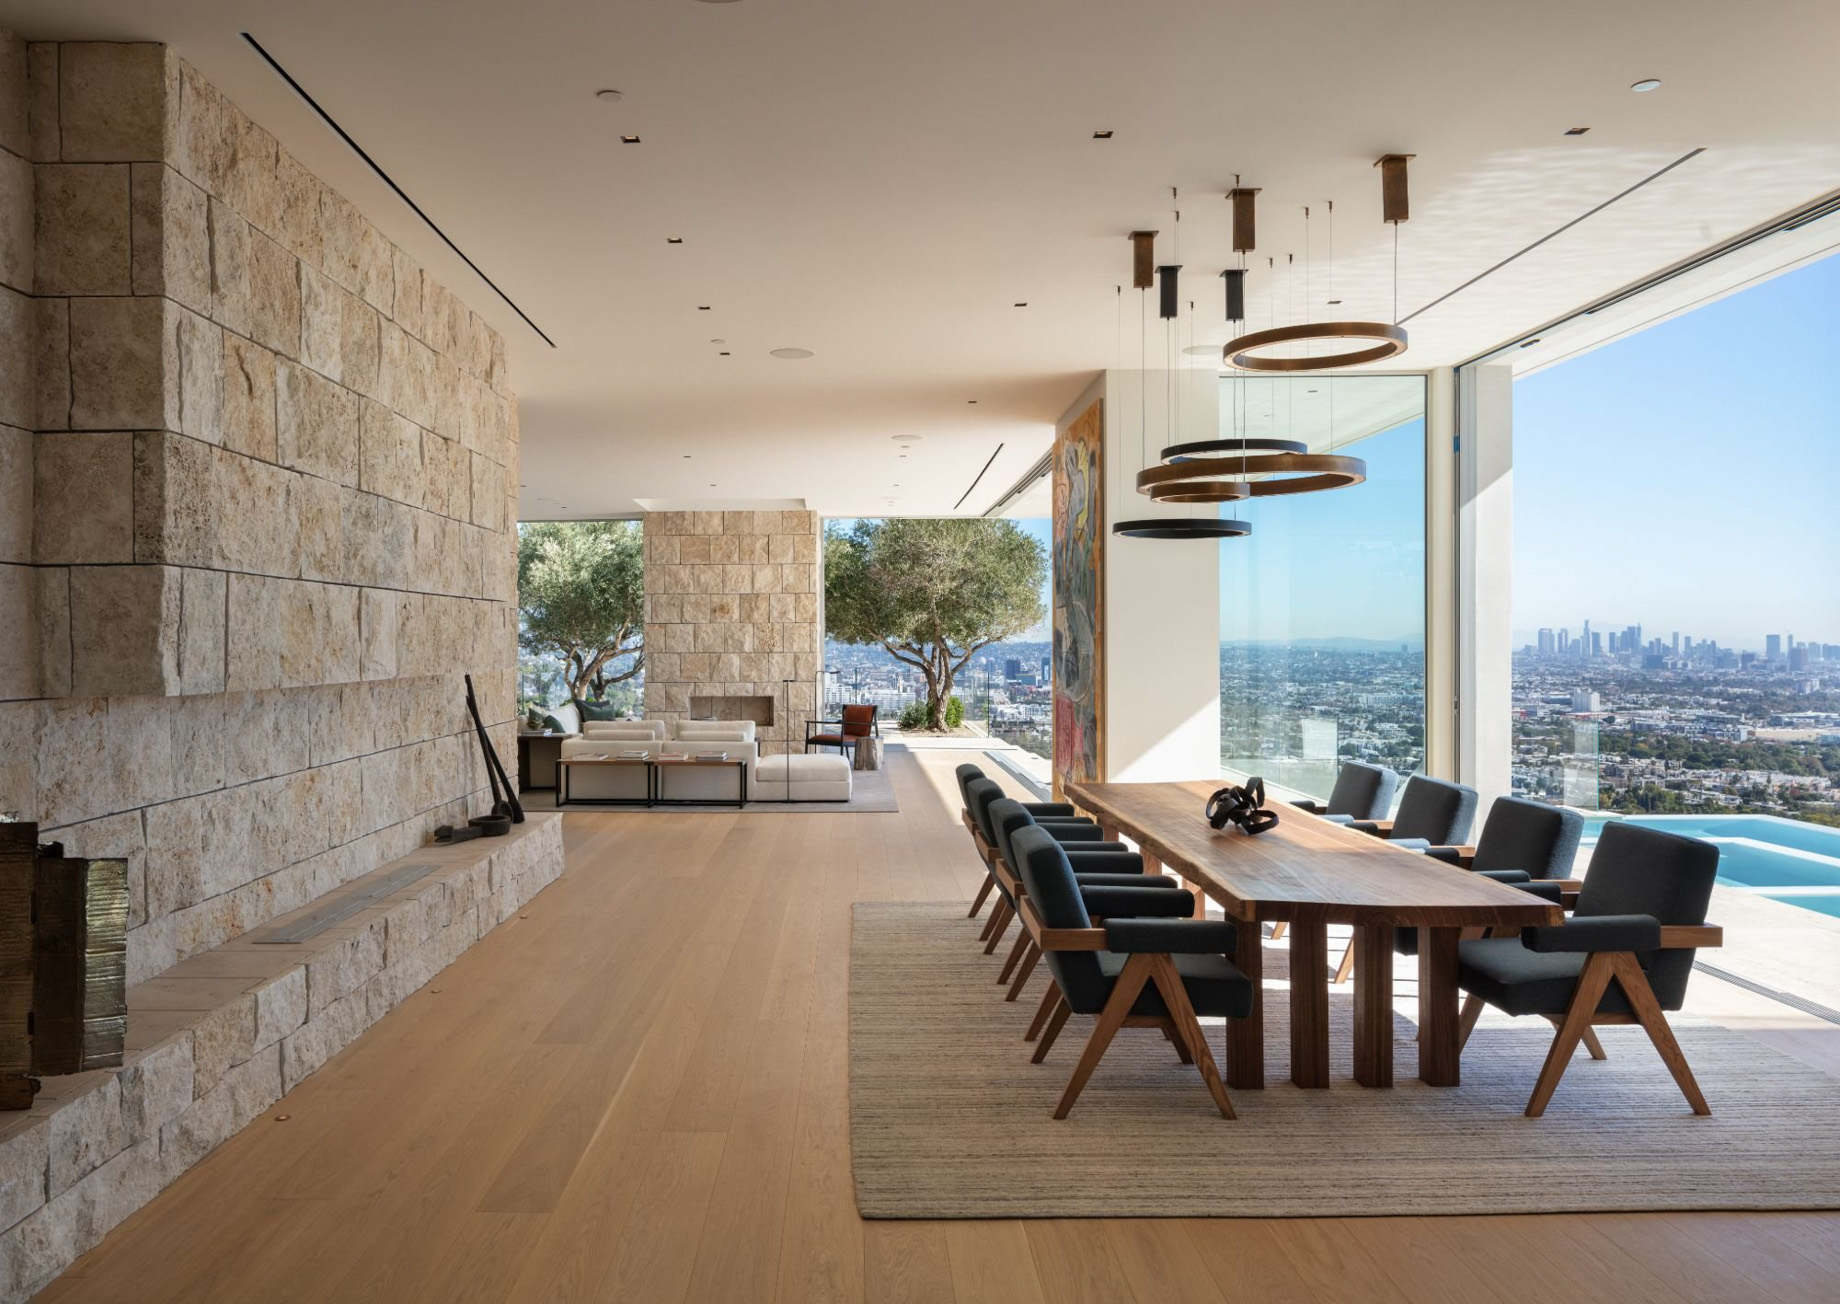 Bellgave Modern Organic Jewel Box-Like Contemporary Home – Los Angeles, CA, USA – 20